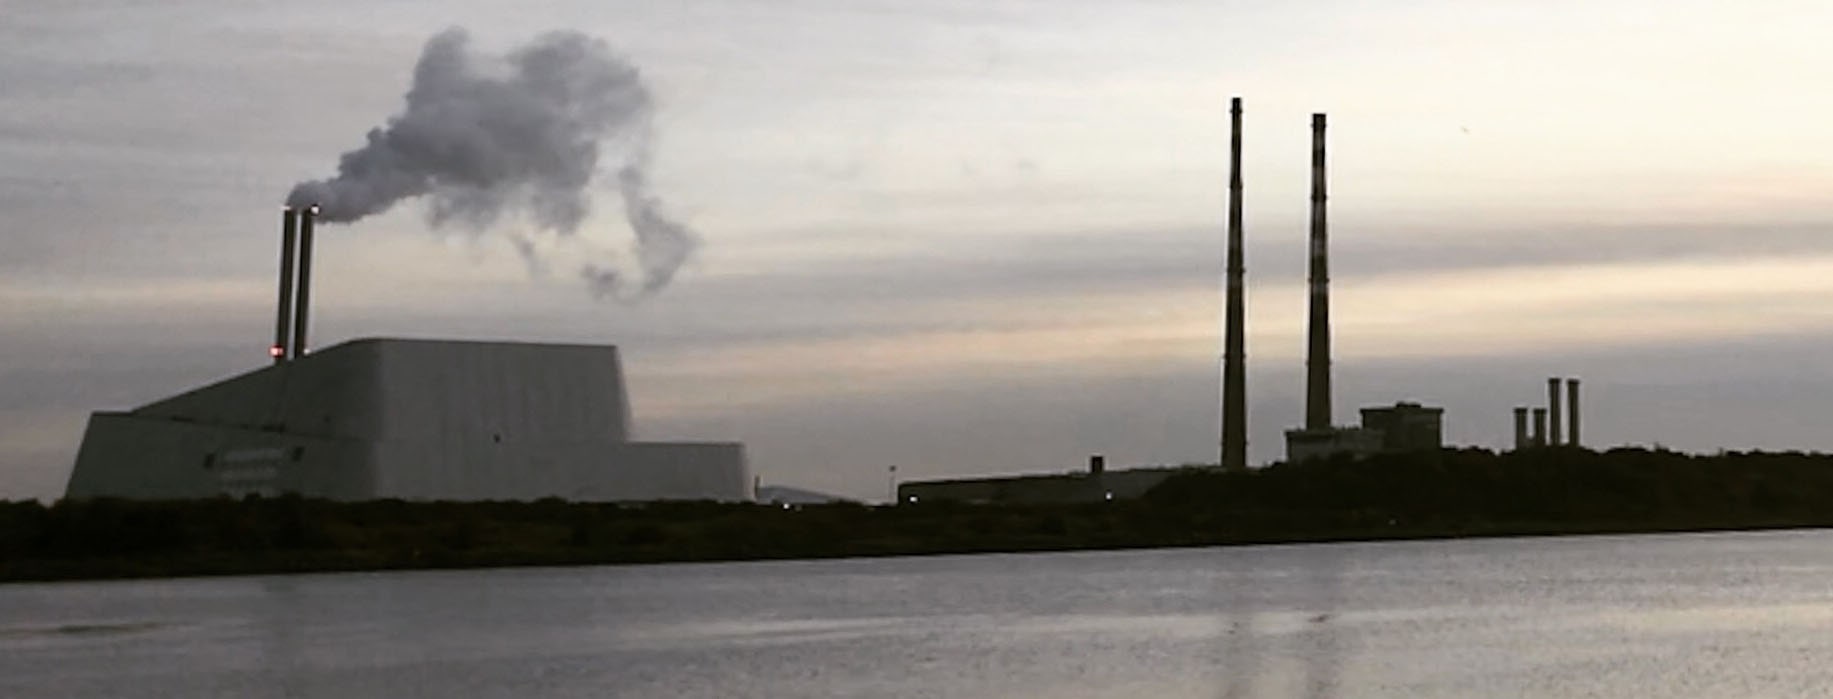 Ireland to miss emissions target despite drop